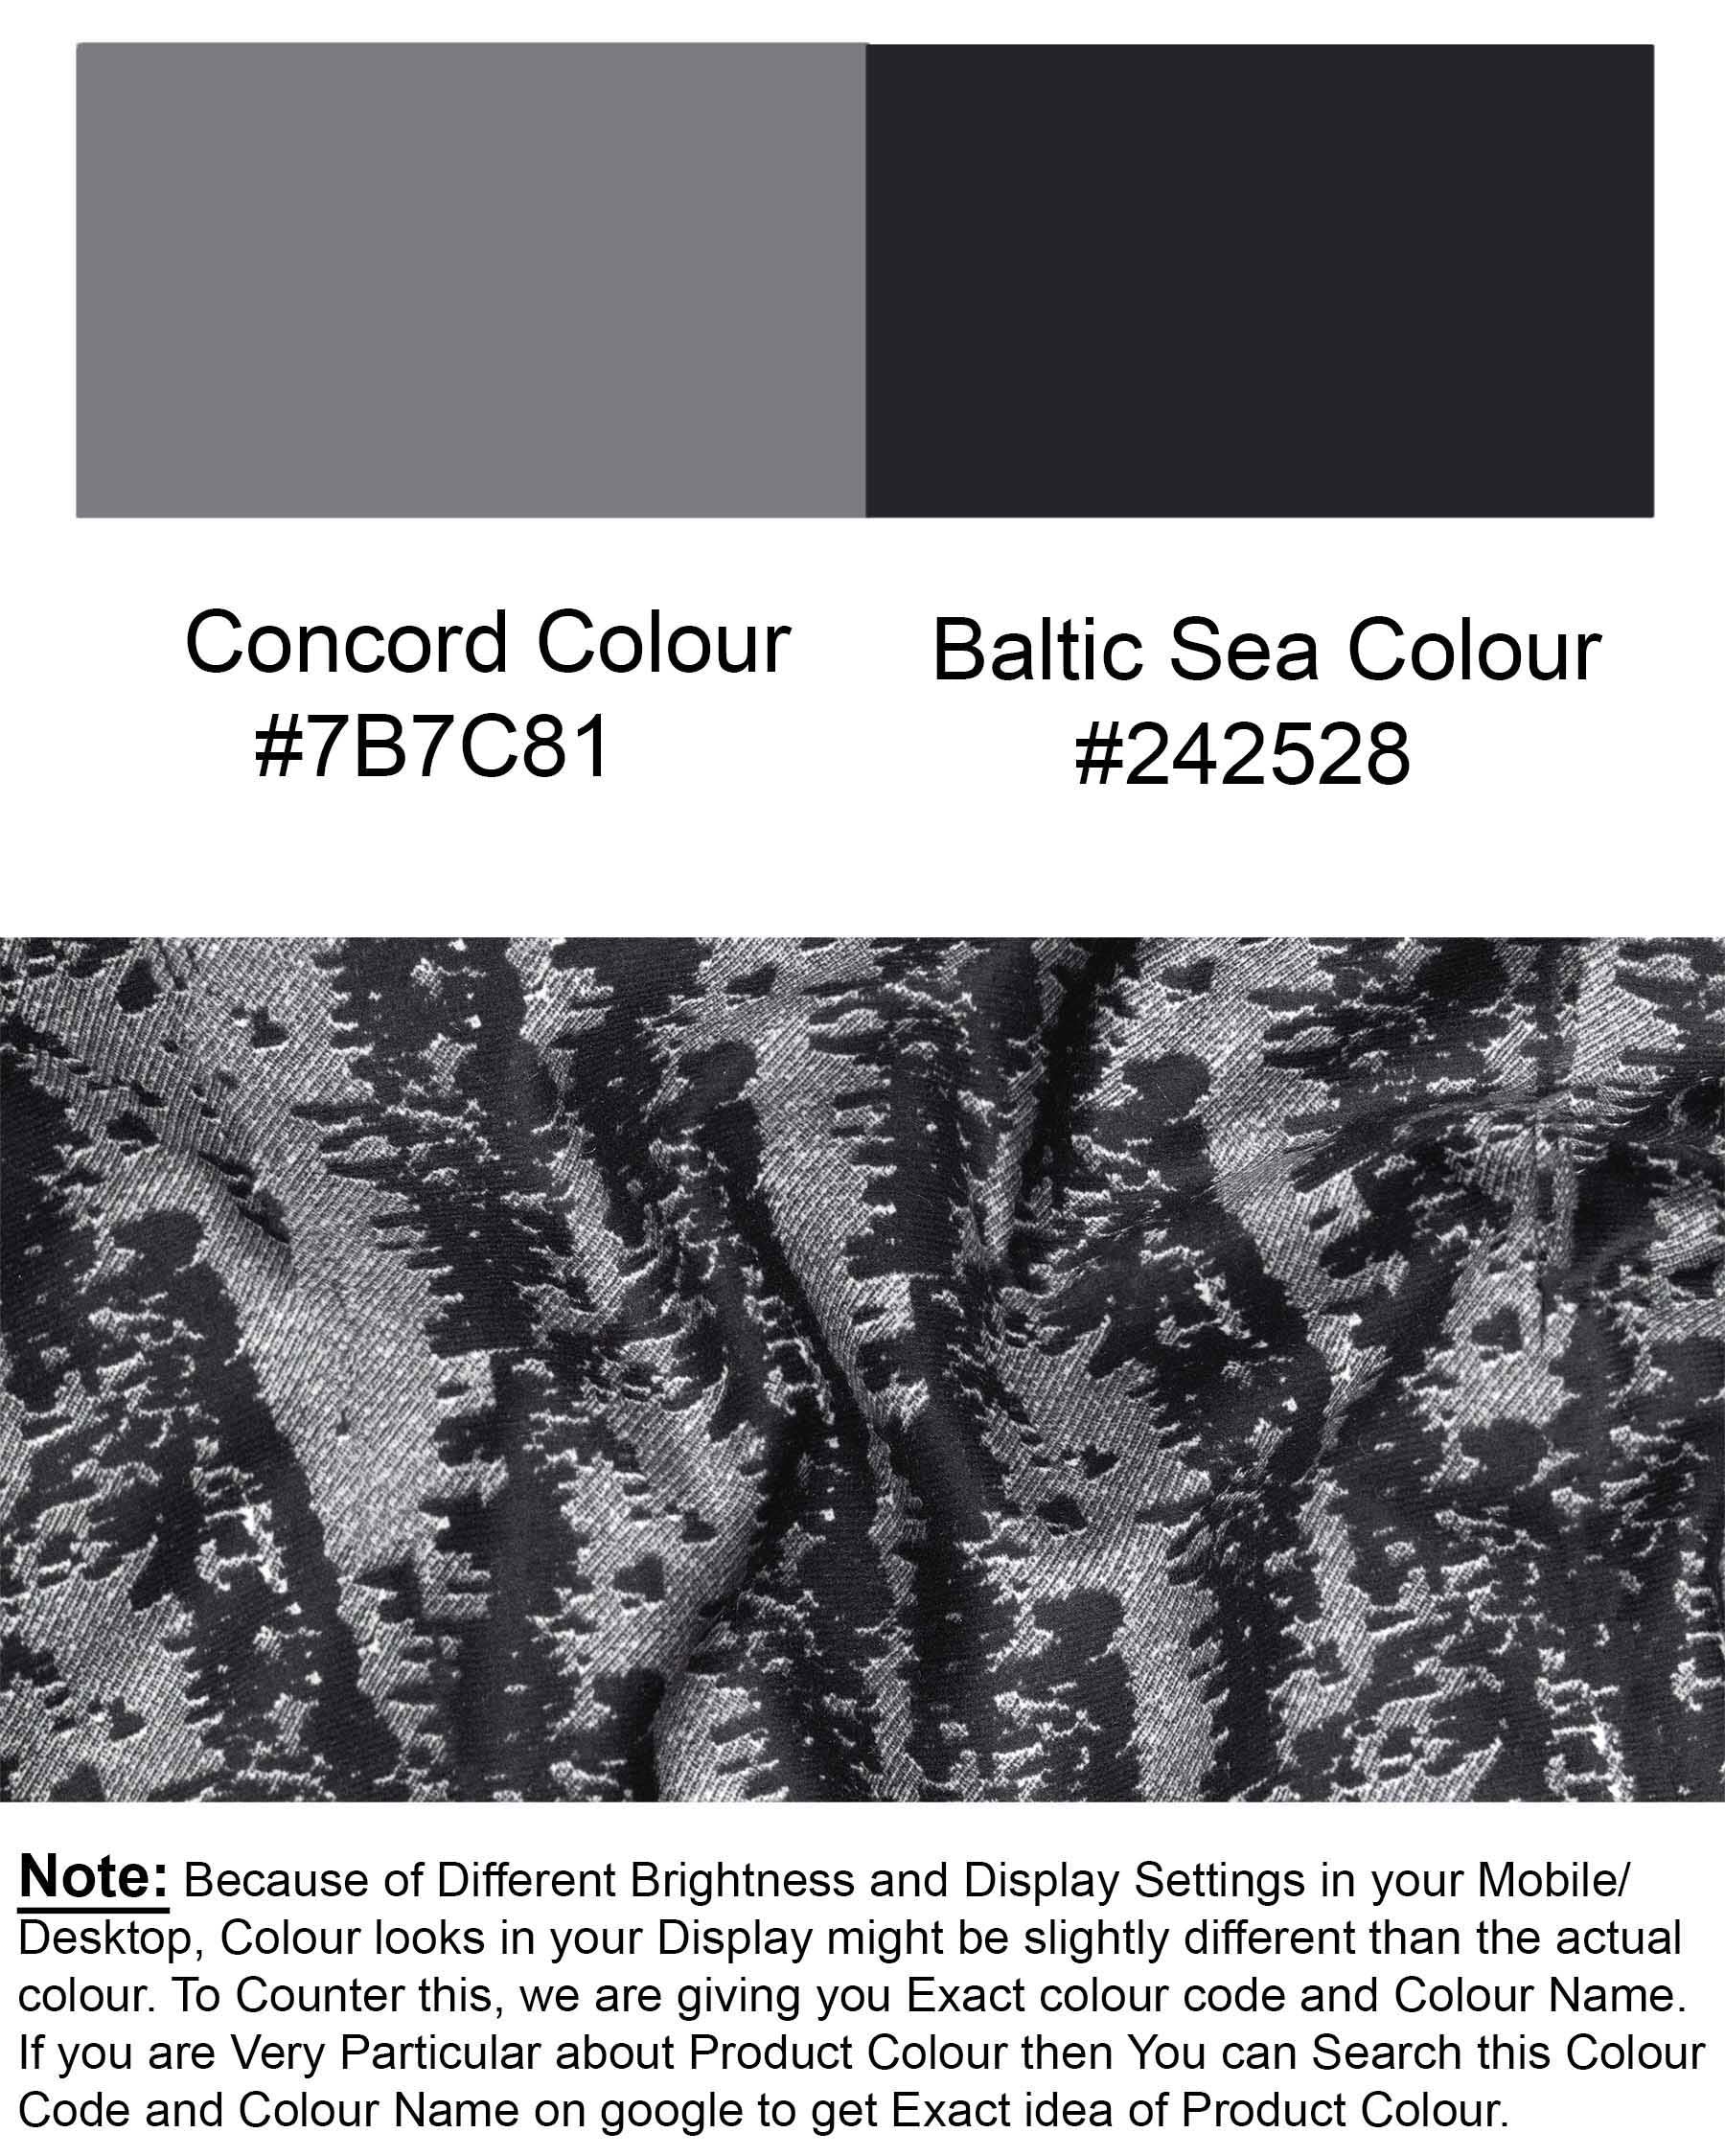 Concord Gray and Baltic Sea Black velvet Designer Blazer BL1821-SB-36,BL1821-SB-38,BL1821-SB-40,BL1821-SB-42,BL1821-SB-44,BL1821-SB-46,BL1821-SB-48,BL1821-SB-50,BL1821-SB-52,BL1821-SB-54,BL1821-SB-56,BL1821-SB-58,BL1821-SB-60